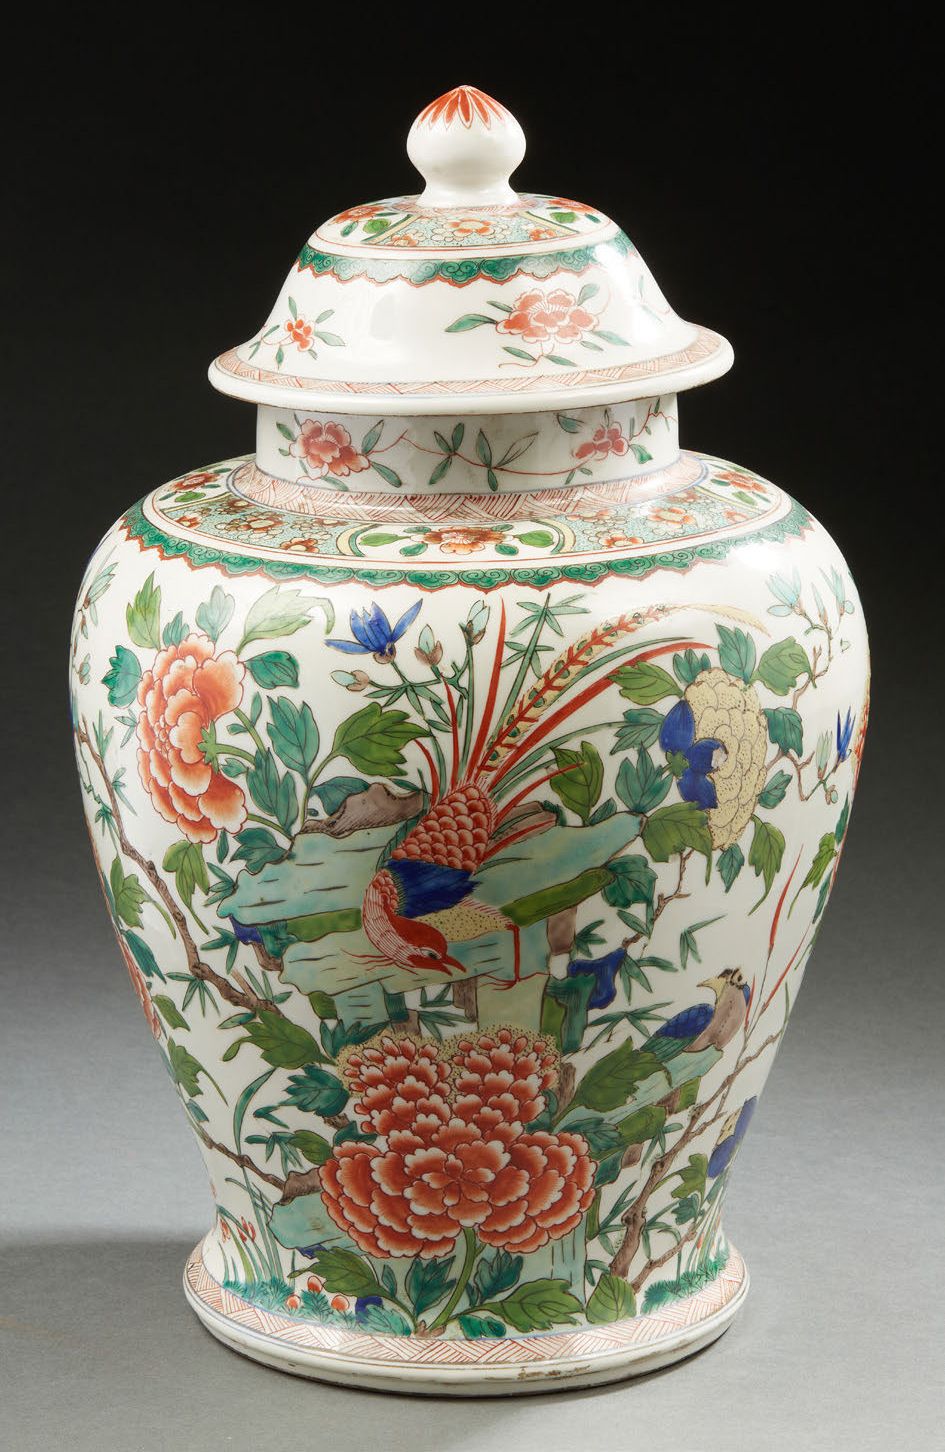 CHINE, XIXe siècle 瓷器和珐琅覆盖的绿色家族花瓶，花中有鸟和牡丹。
盖子和地基有裂痕。
H.43,5 cm